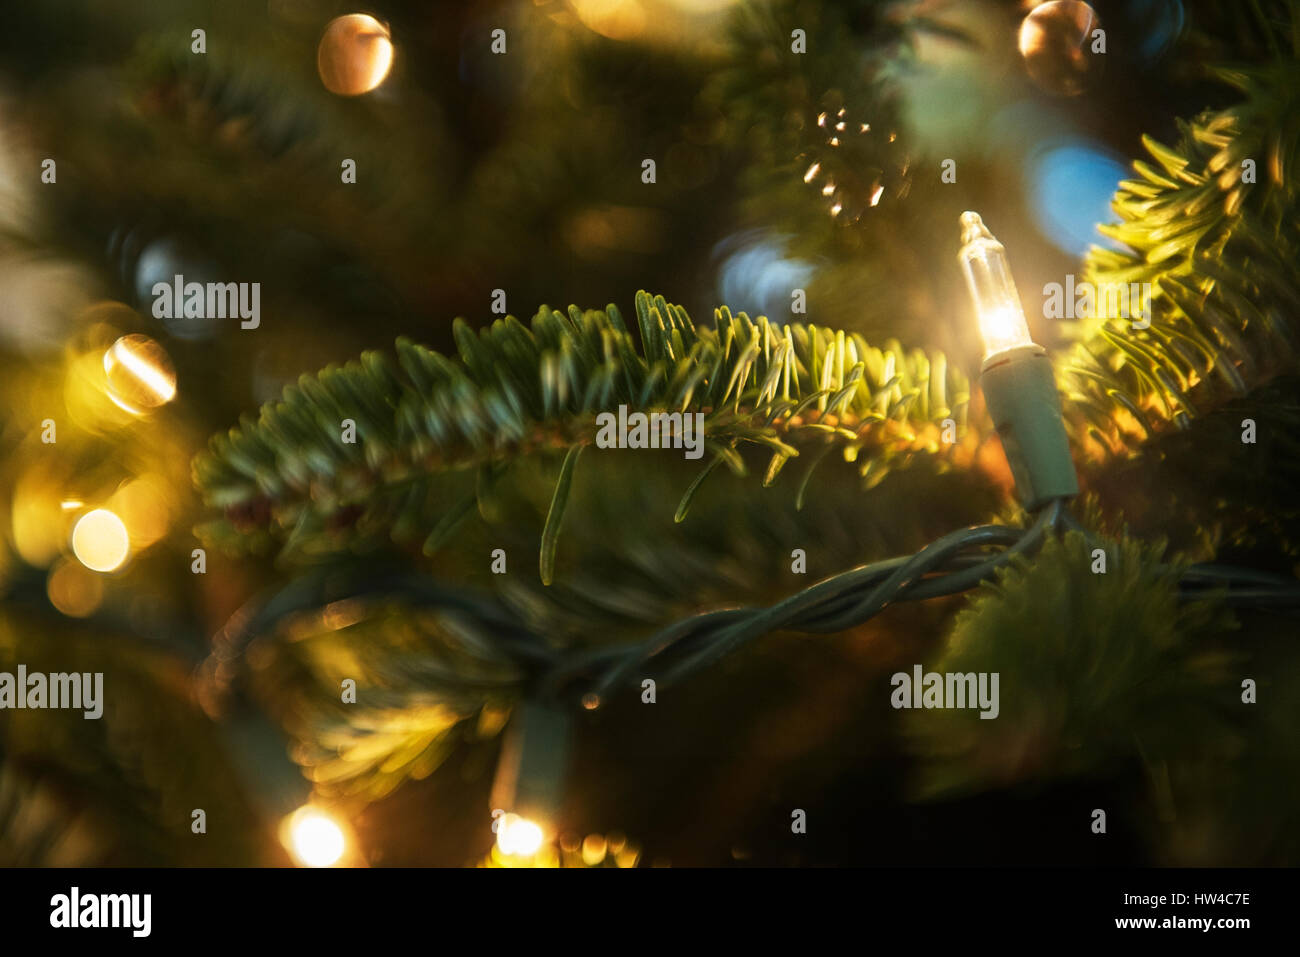 String lights on Christmas tree Stock Photo